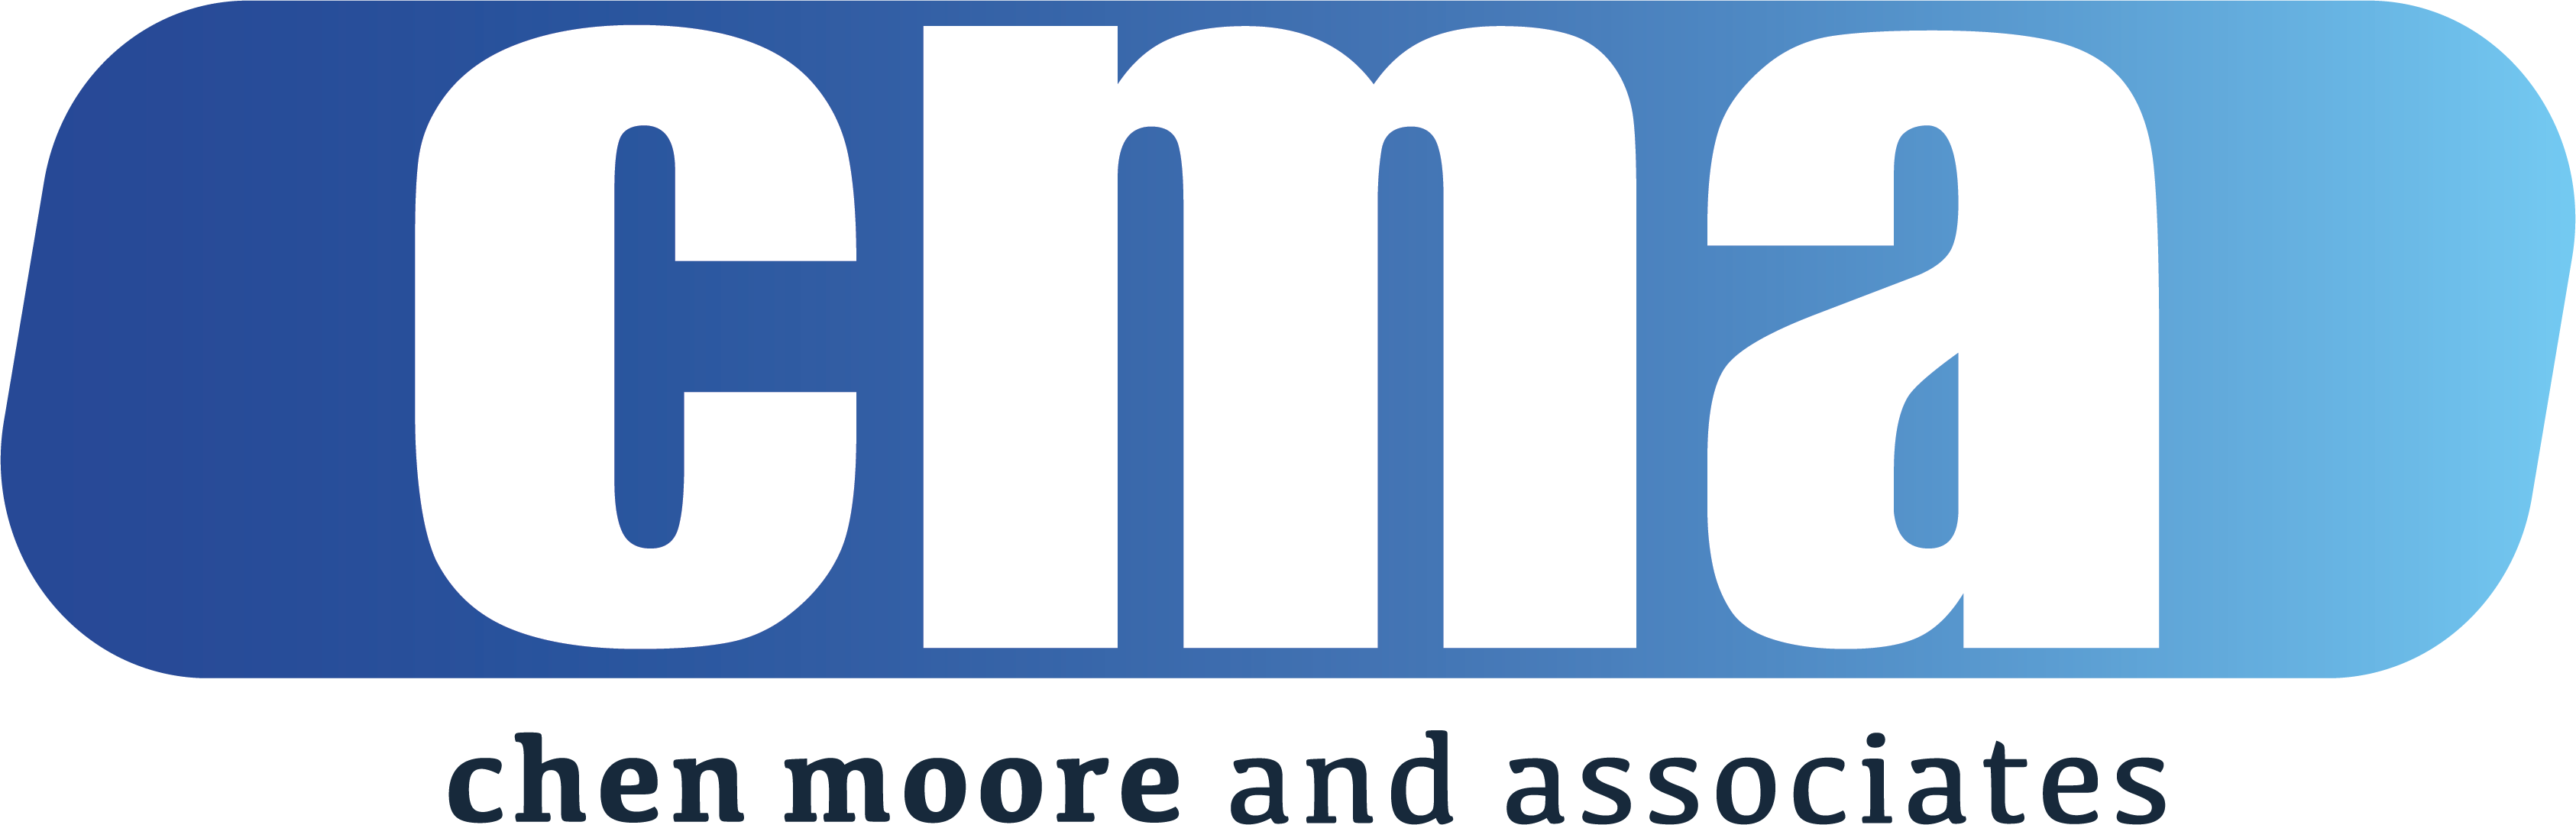 Chen Moore and Associates logo